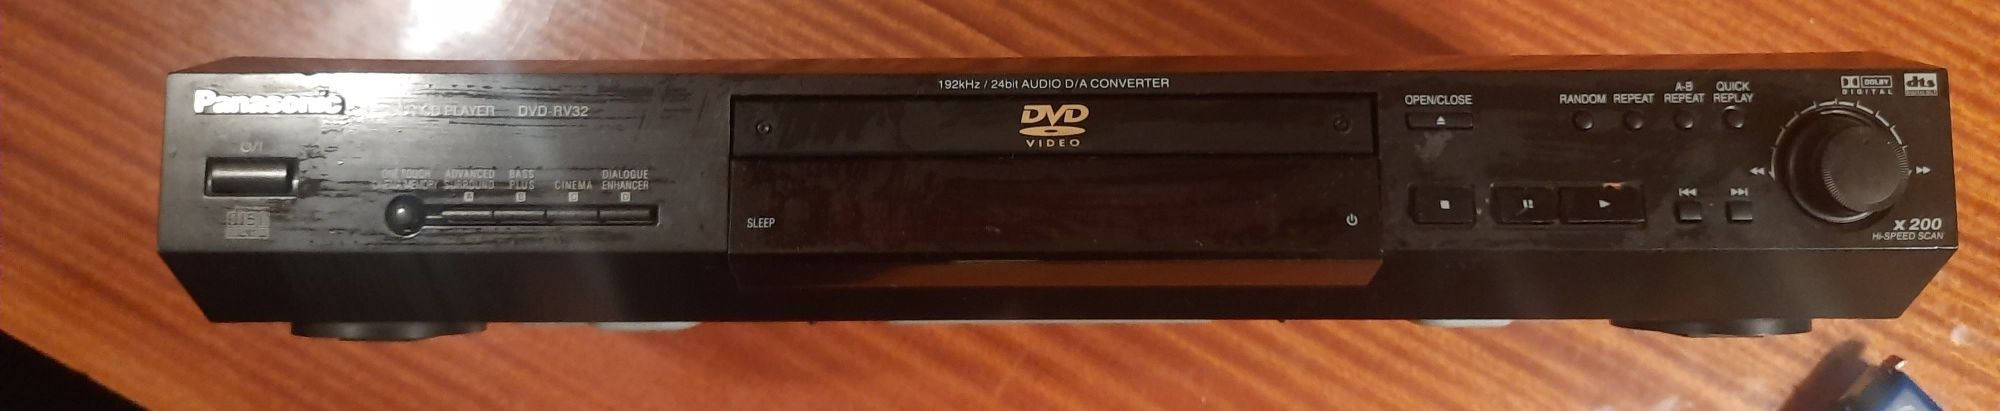 Panasonic dvd-RV 32